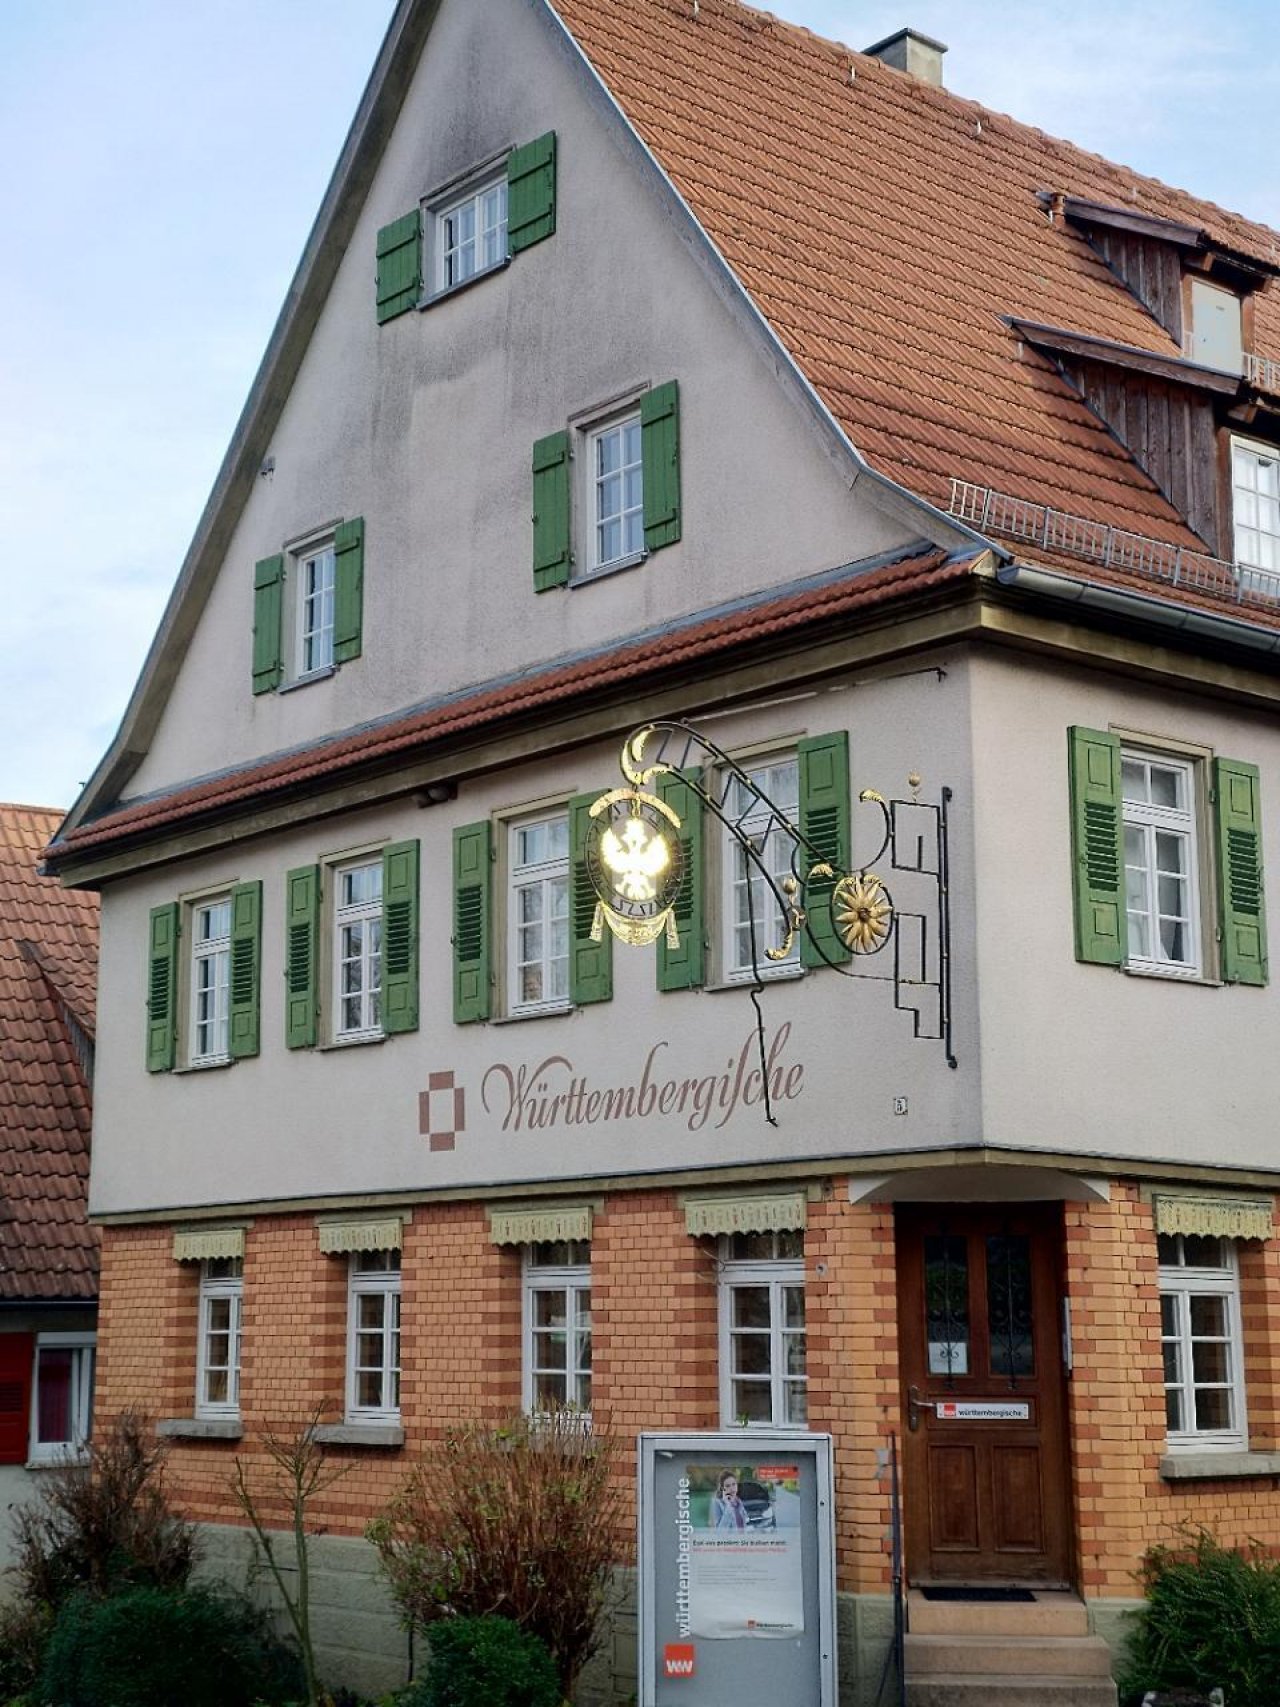 Gasthaus in Landauf, LandApp BW App spotted by Martin Hahn on 20.12.2020